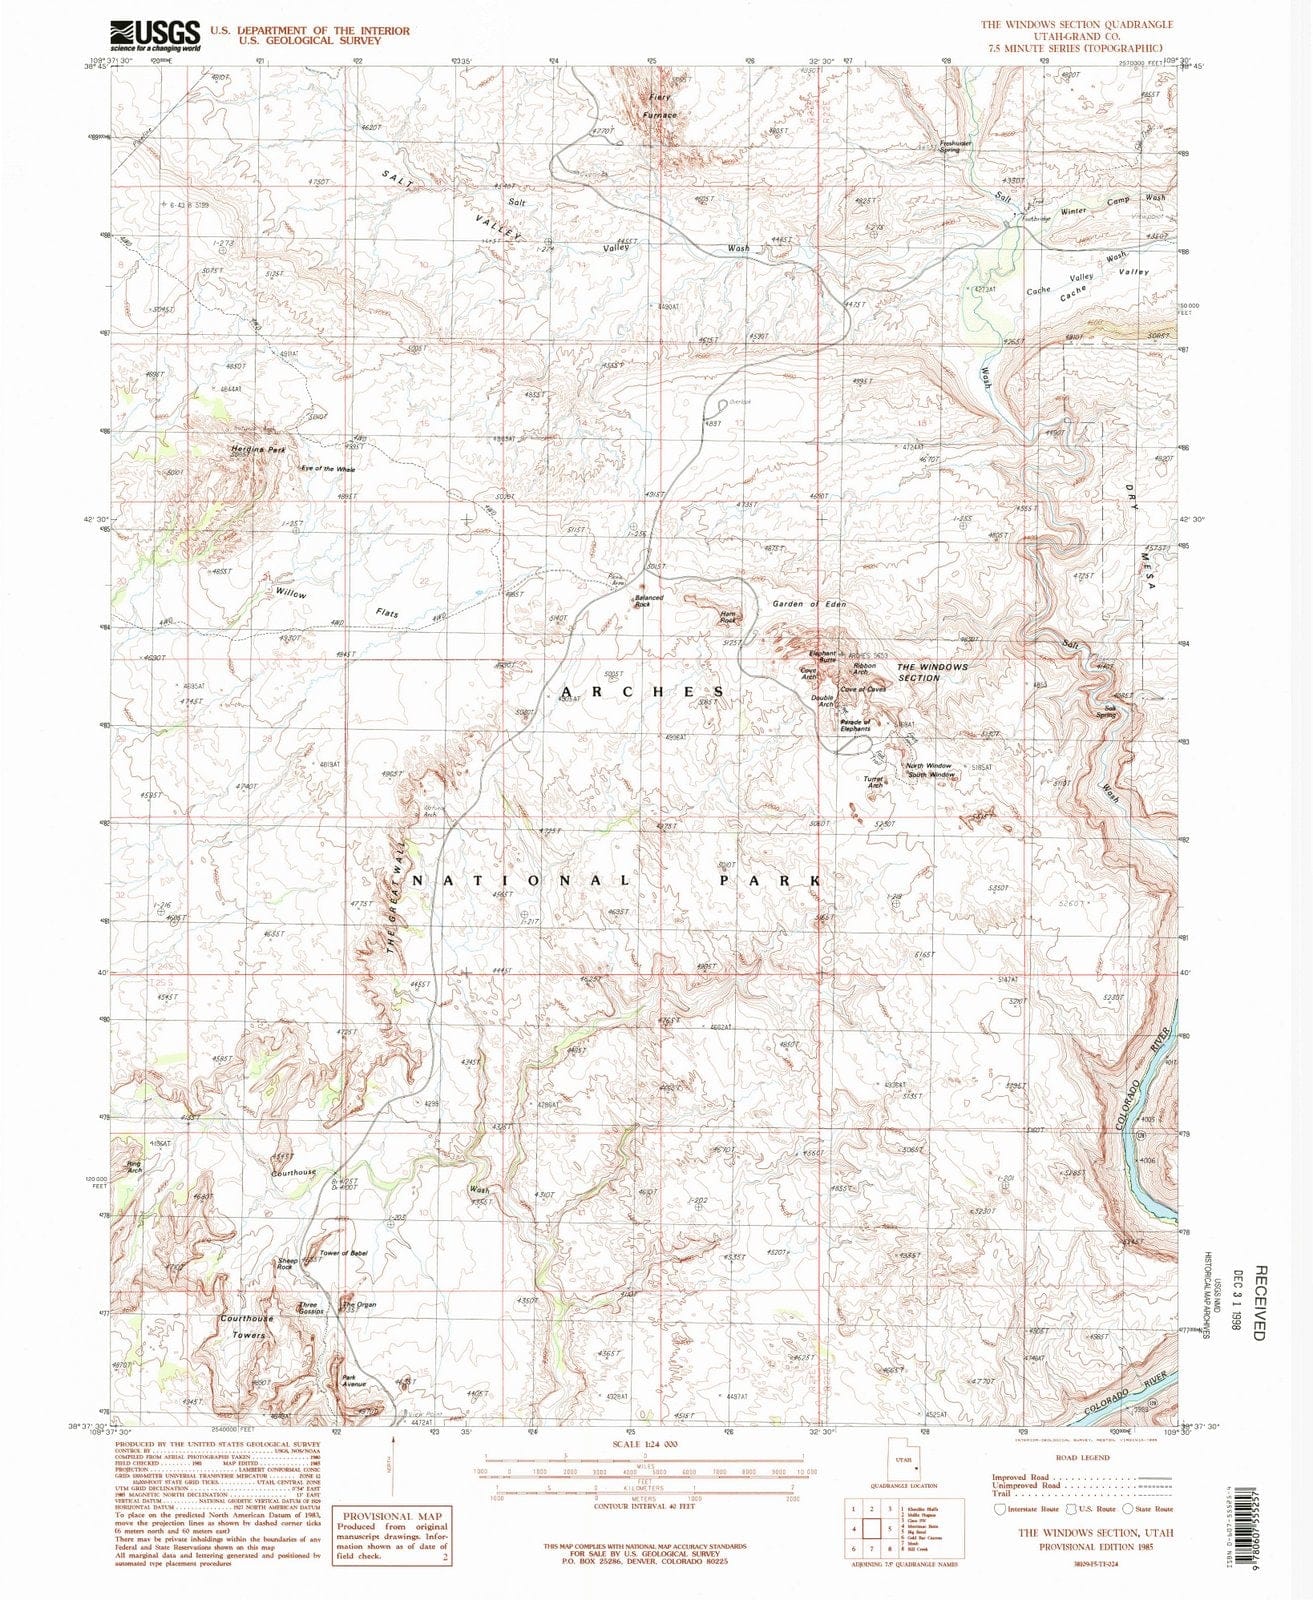 1985 The Windowsction, UT - Utah - USGS Topographic Map